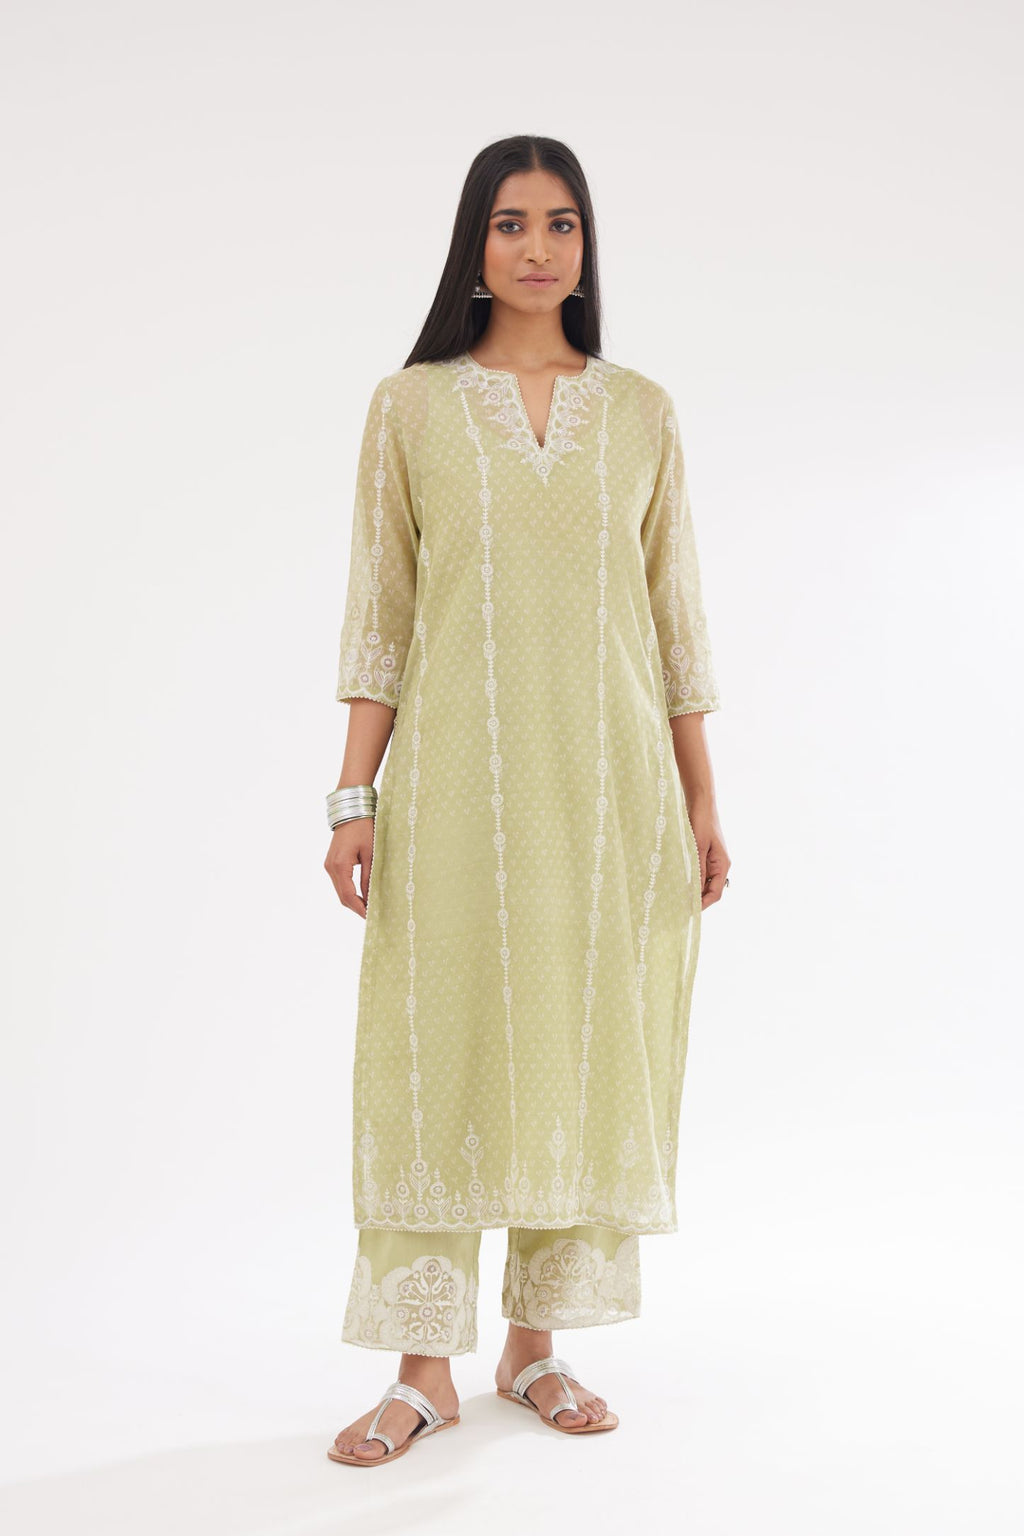 Green cotton chanderi hand block printed kurta set with dori and silk thread chhari - stripes, all over and heavier butas at hem.